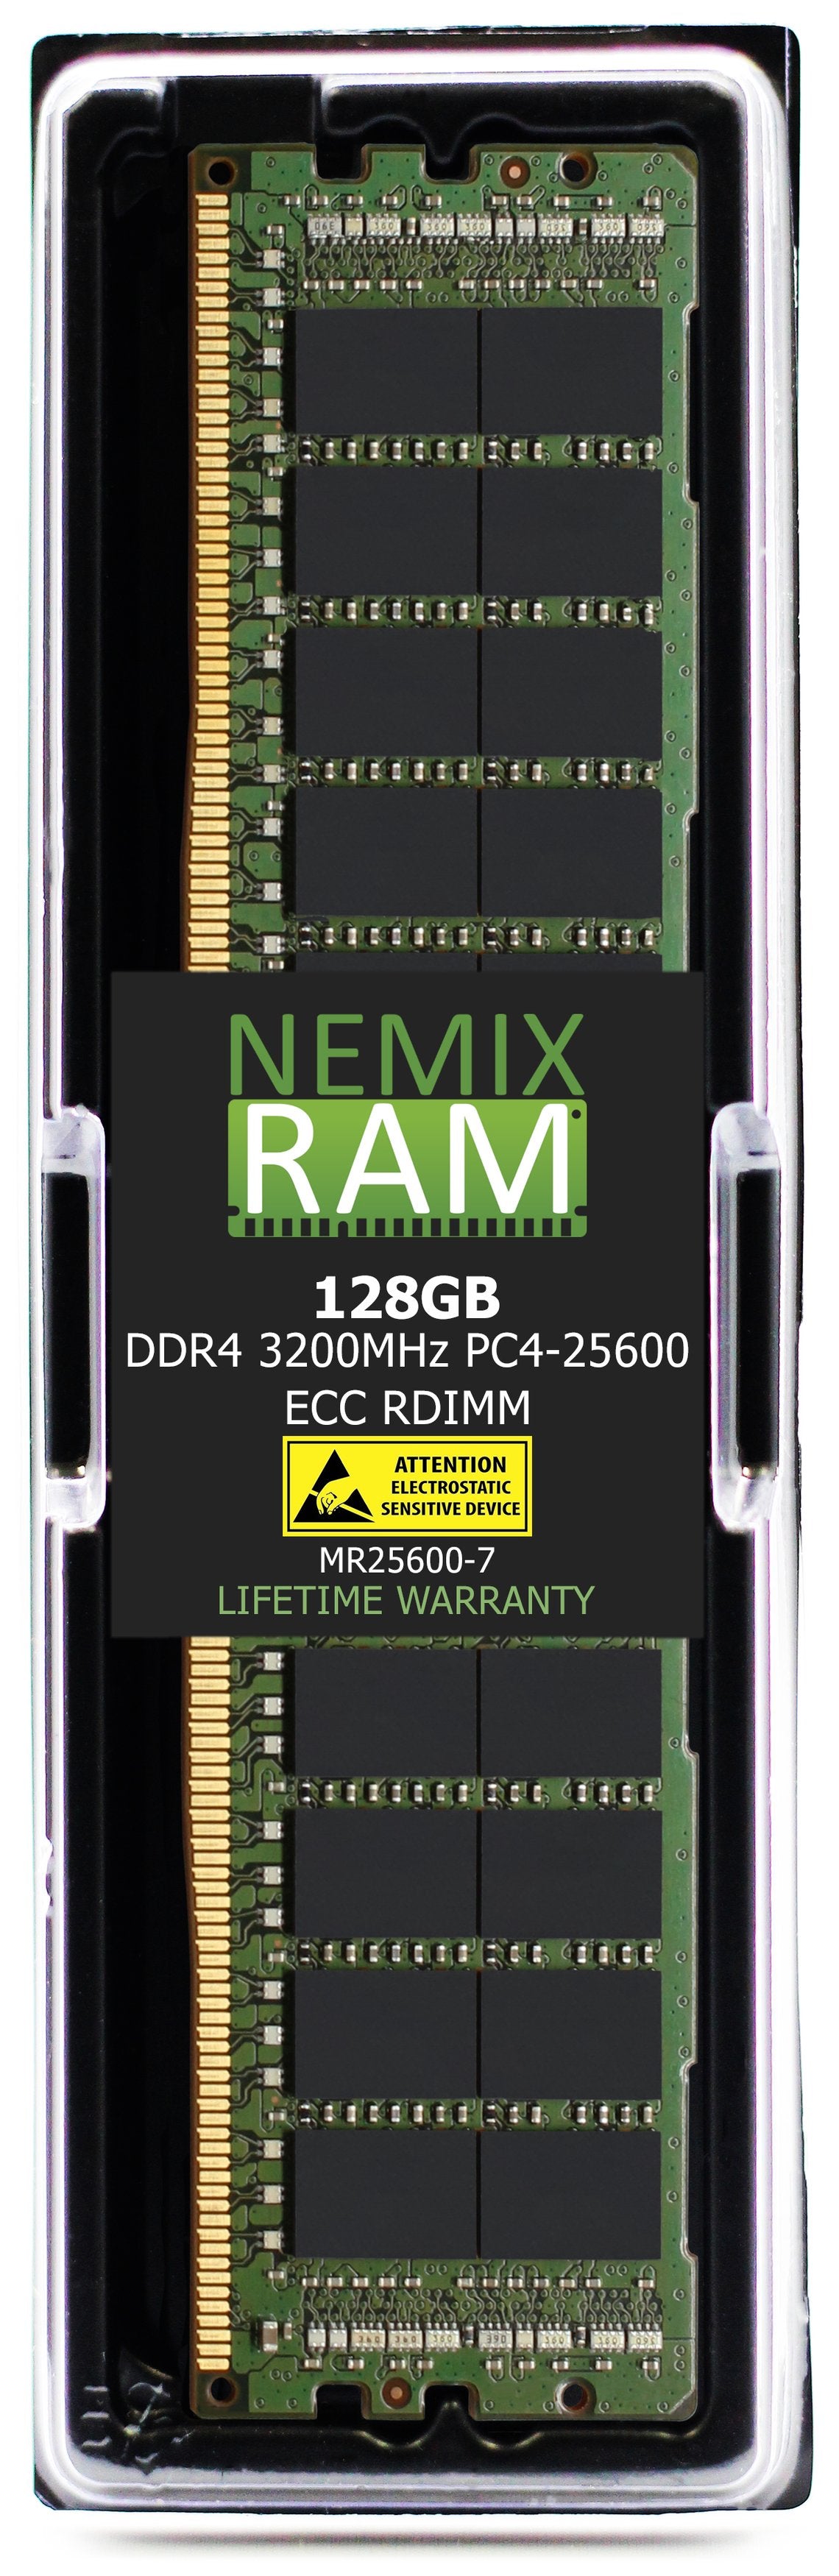 Hynix HMABAGR7C4R4N-XS 128GB DDR4 3200MHZ PC4-25600 RDIMM Compatible Memory Module